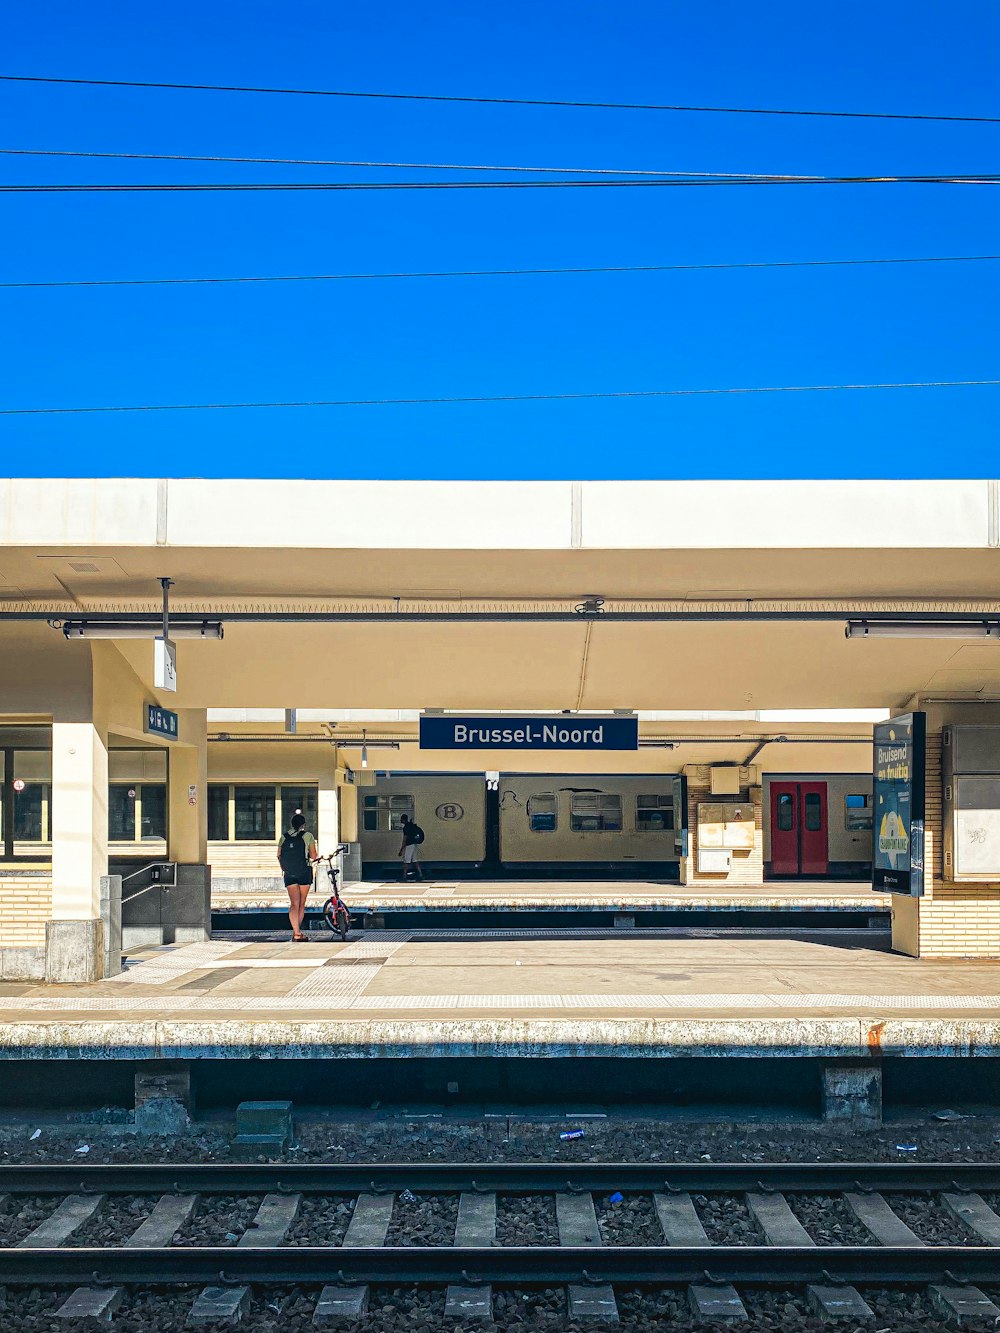 a train station with a train on the tracks